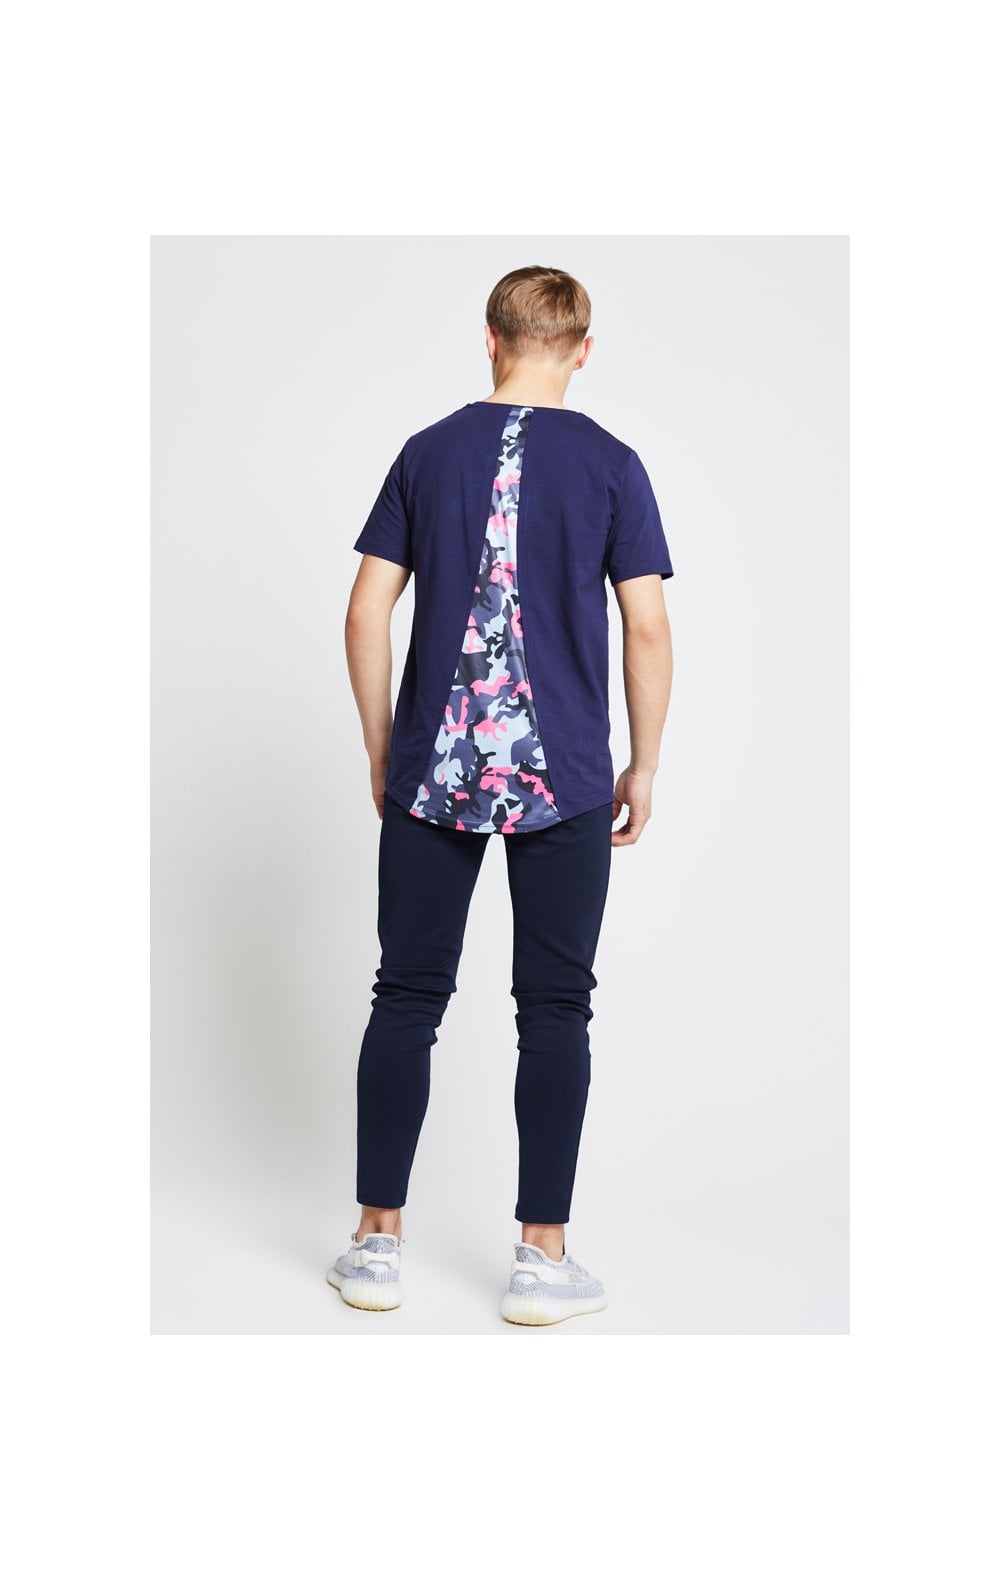 Illusive London T-Shirt Schulterfrei - Marineblau und Neon Rosa Camouflage (5)